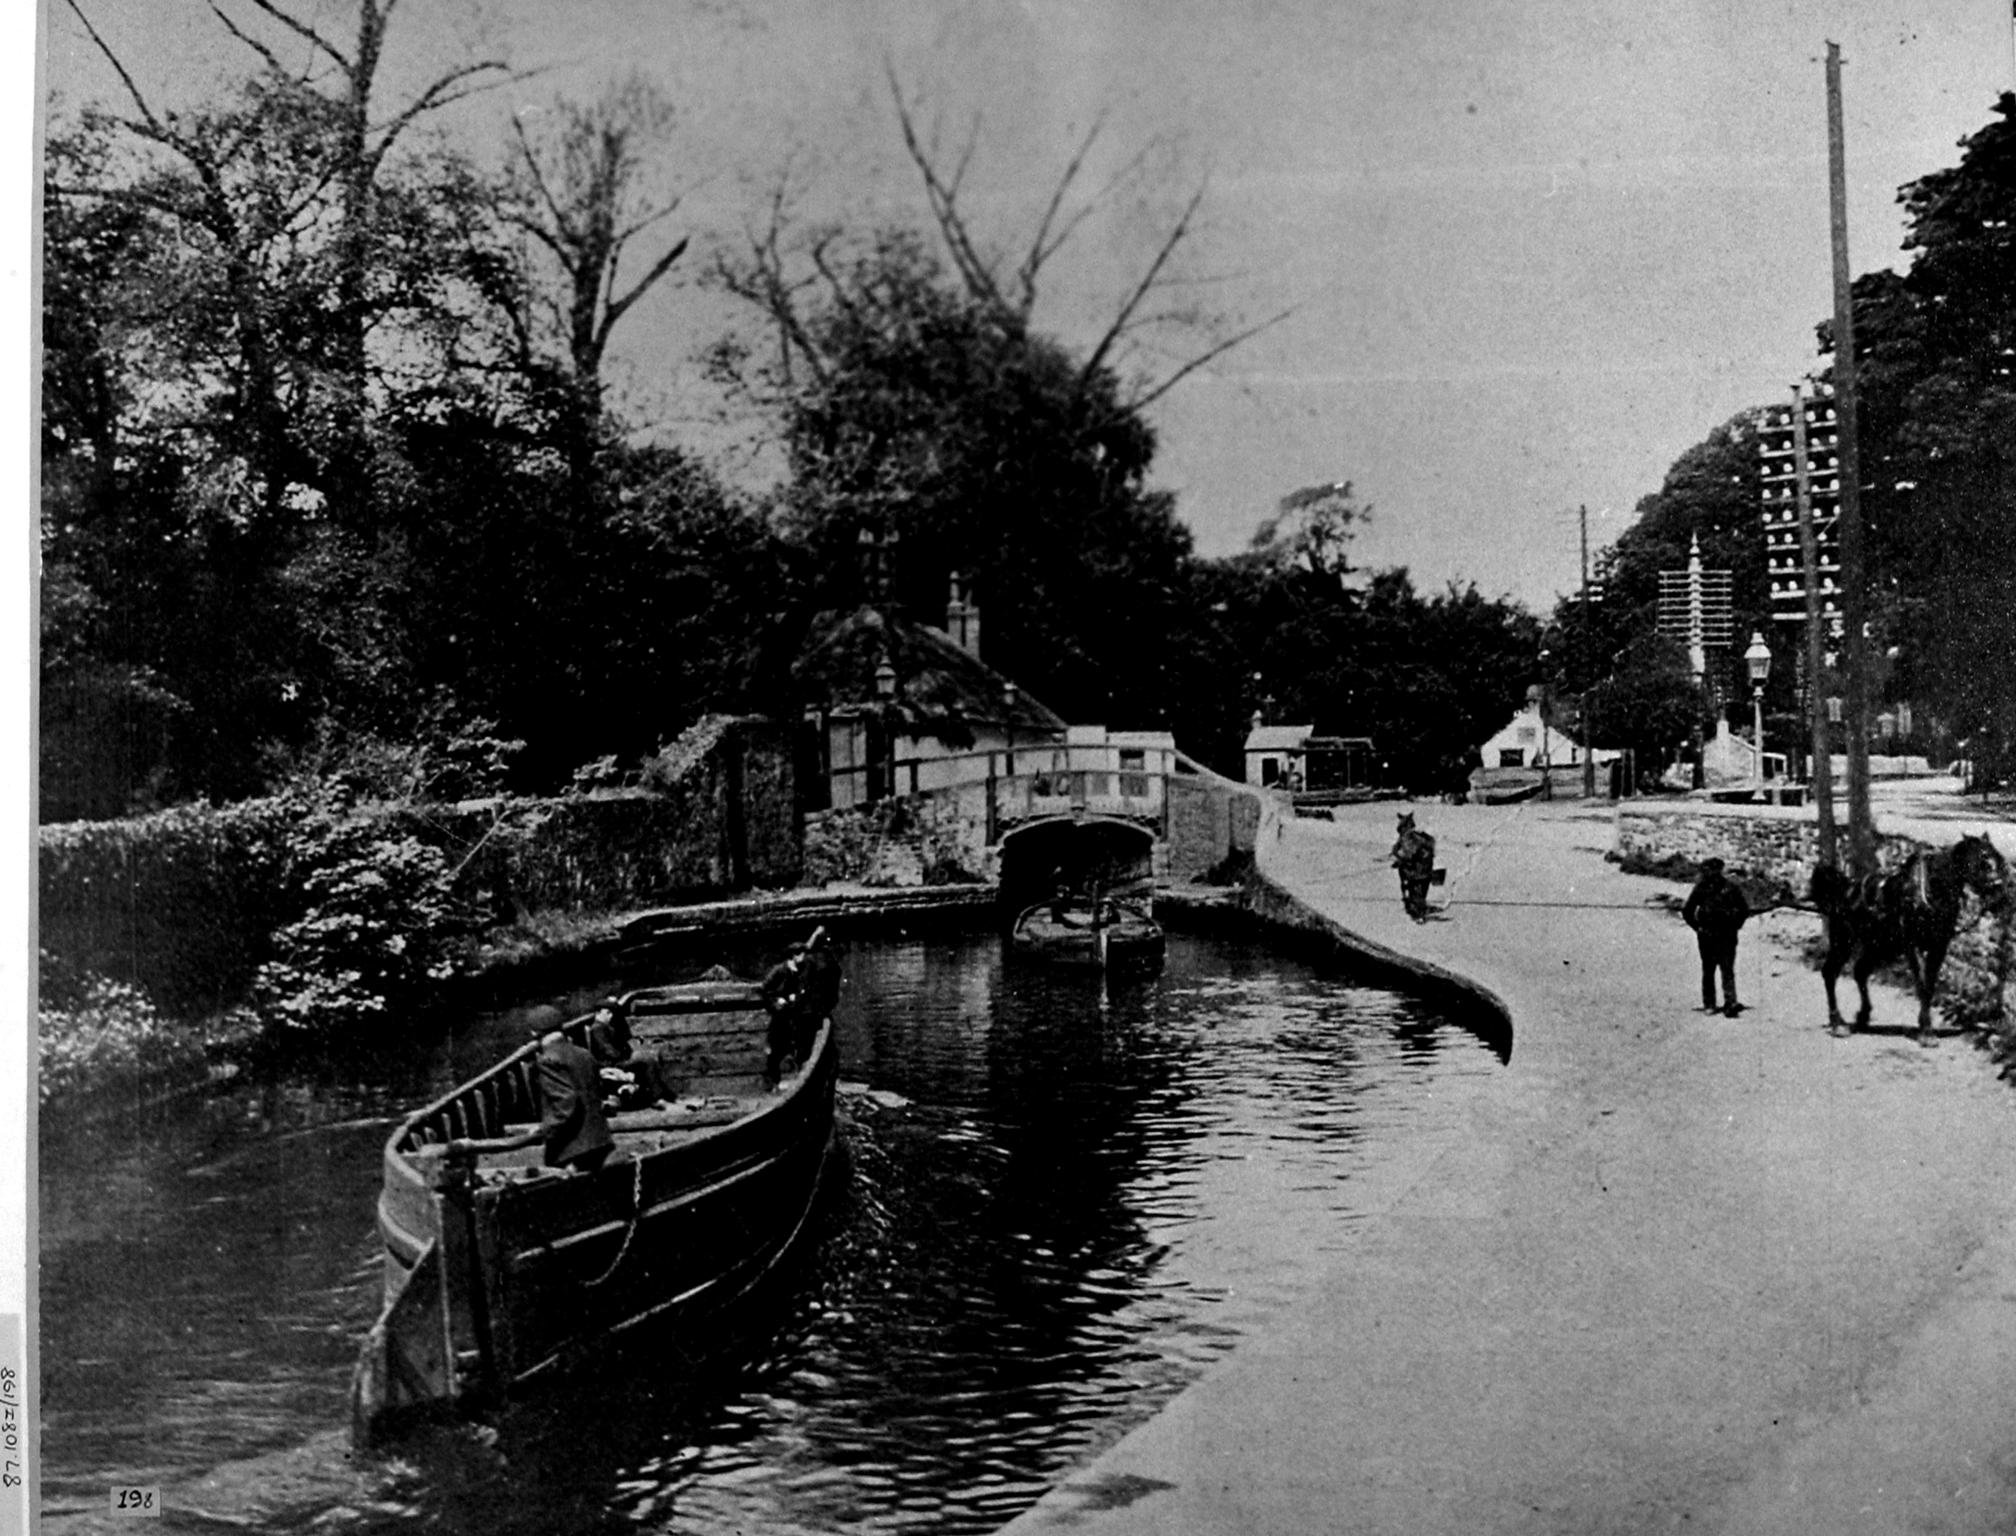 Glamorganshire Canal, photograph